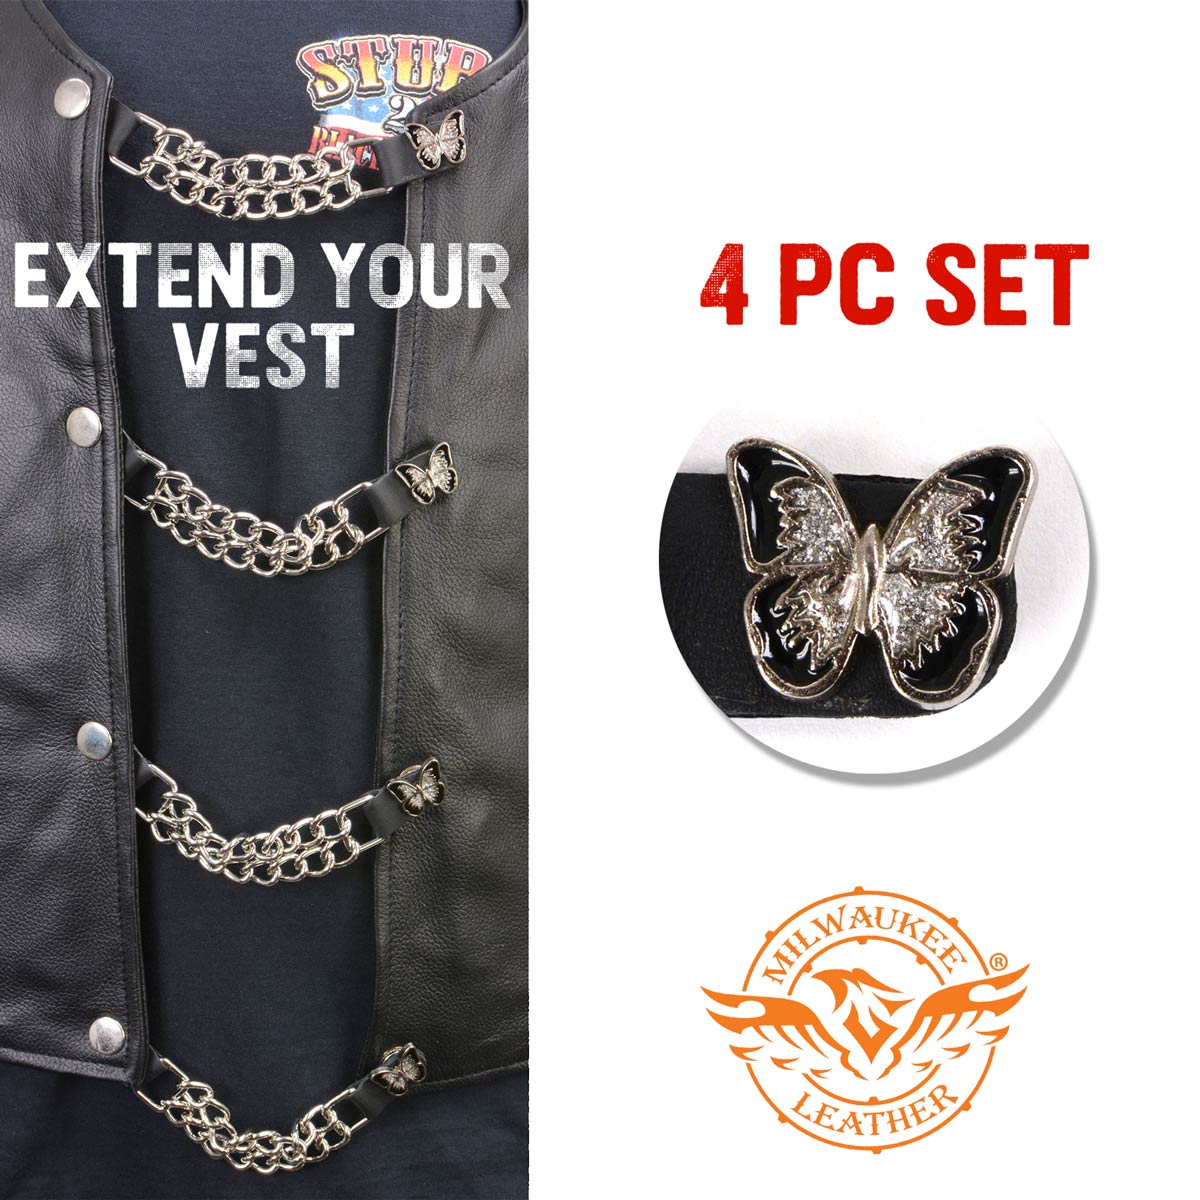 Milwaukee Leather Sparkle Butterfly Medallion Vest Extender - Double Chrome Chains Genuine Leather 6.5" Extension 4-PCS MLA6022SET